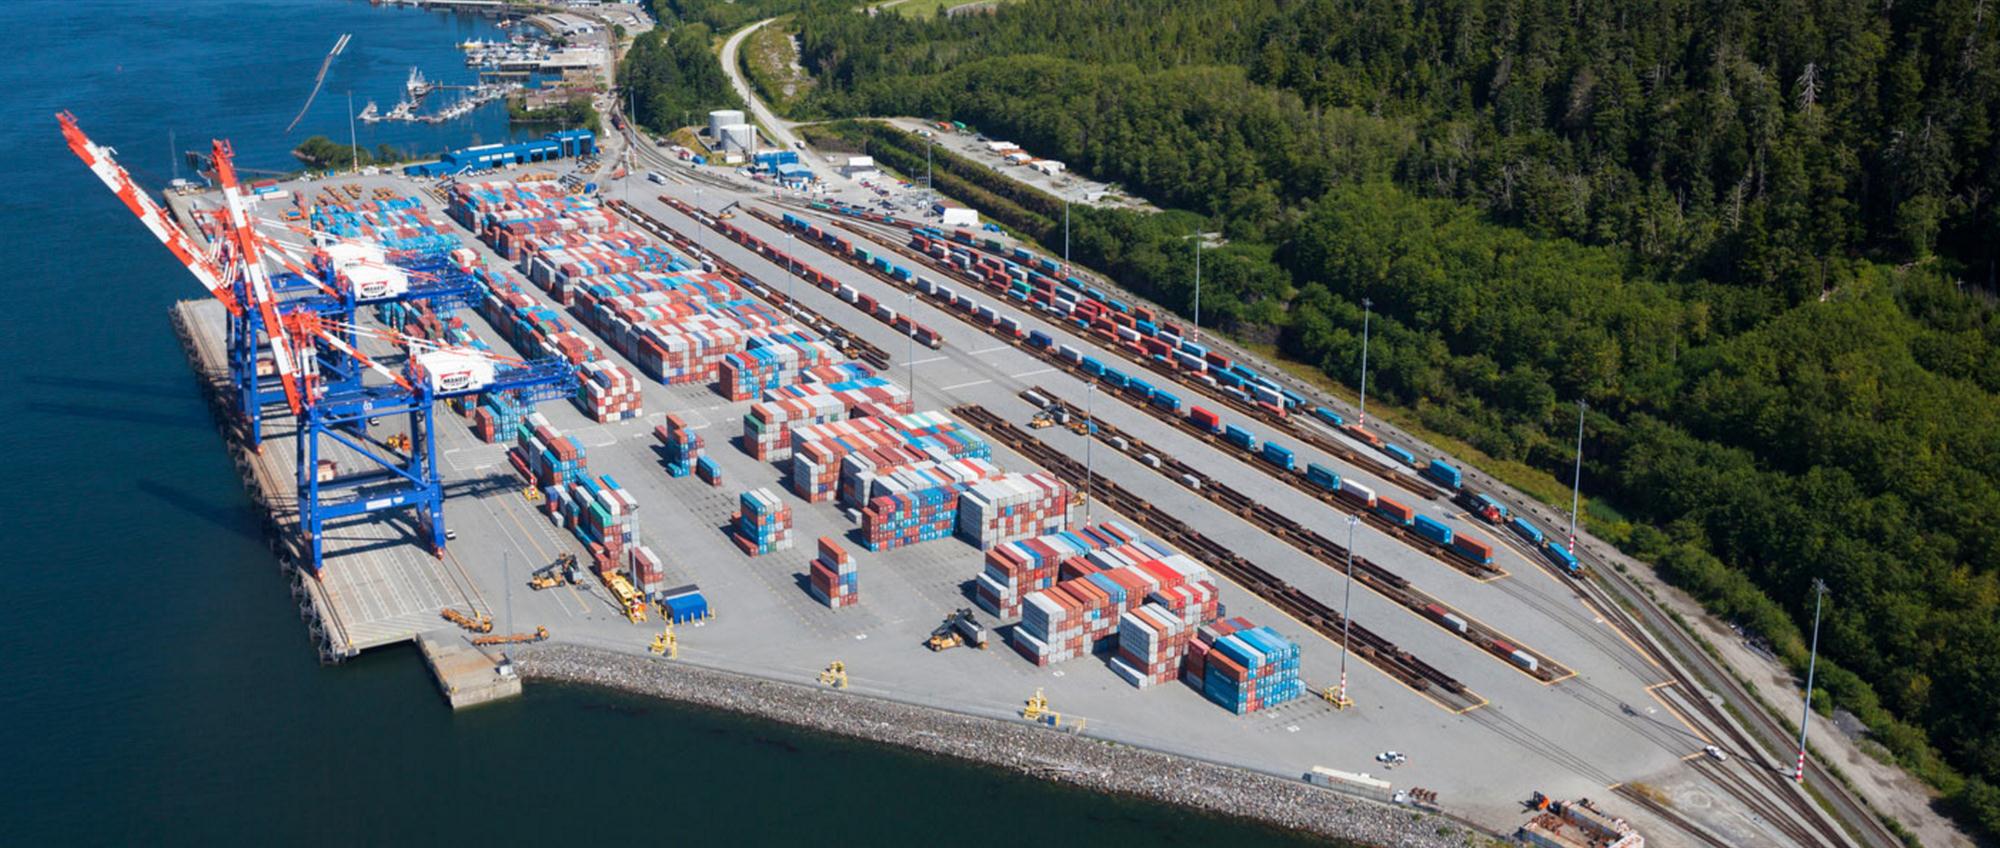 Self Photos / Files - DP World Prince Rupert Fairview Container Terminal - DP World Vancouver 2016